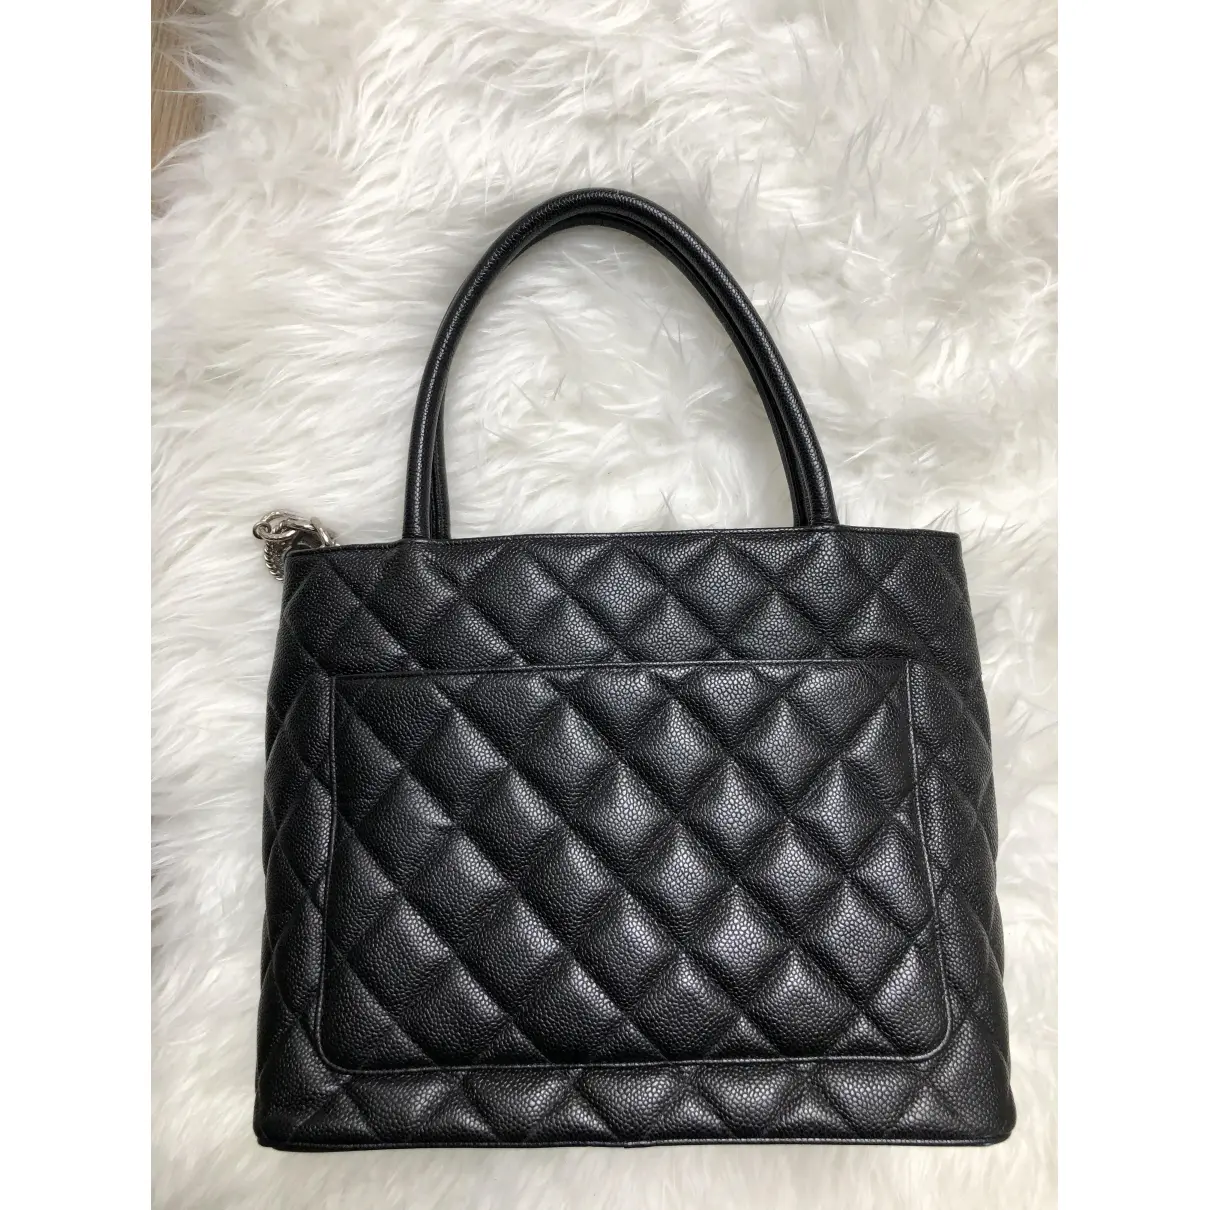 Buy Chanel Médaillon leather handbag online - Vintage